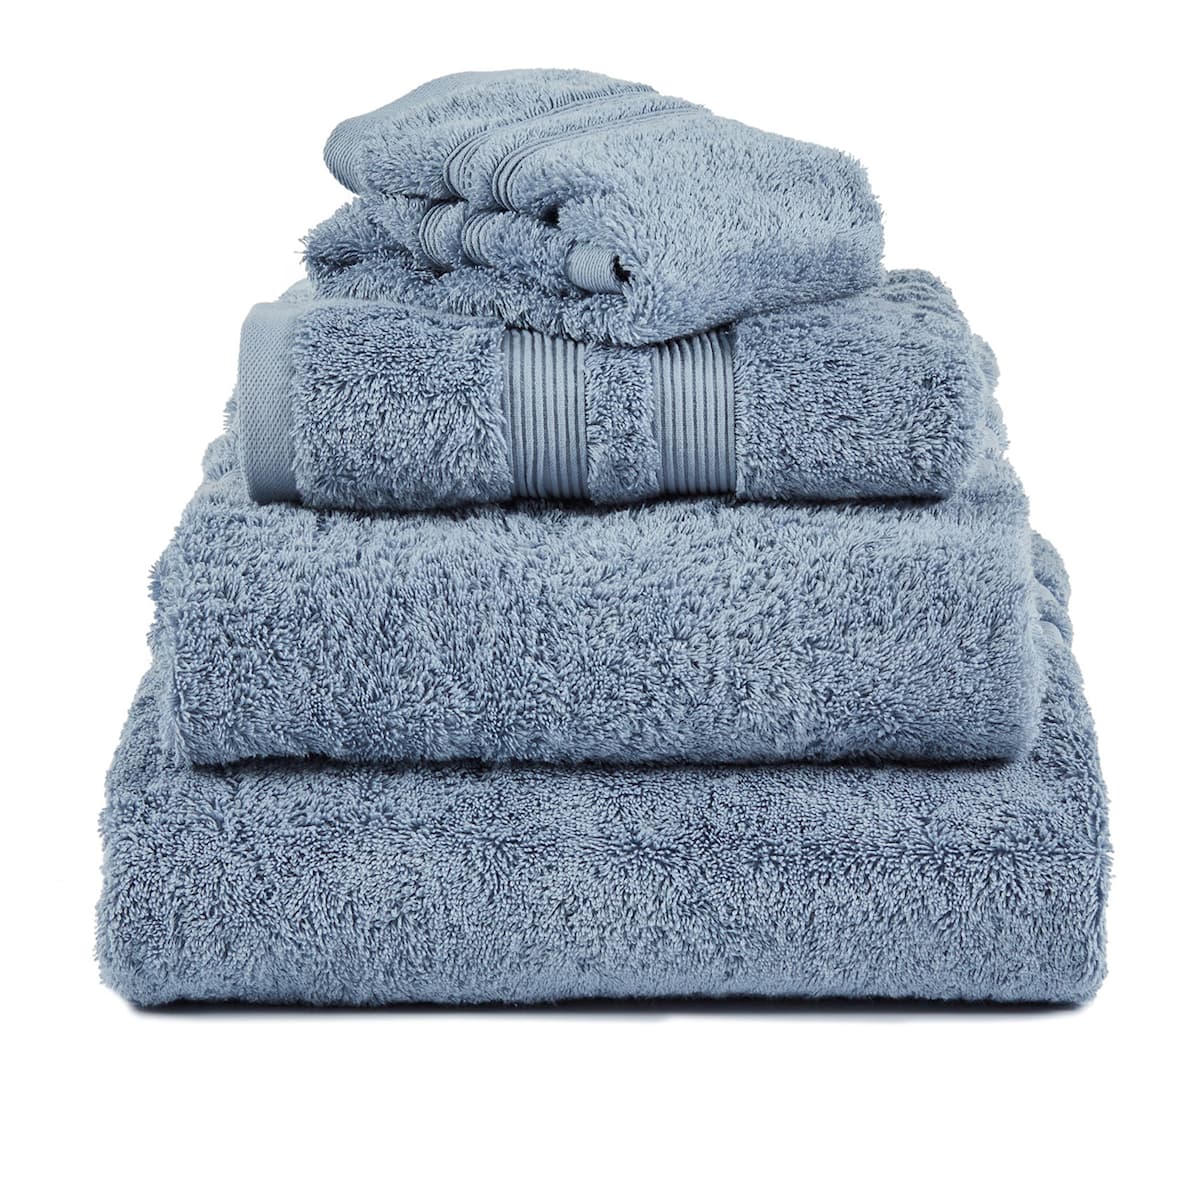 lunar Rock Seventeen Piece Soft Cotton Bath Towel Set